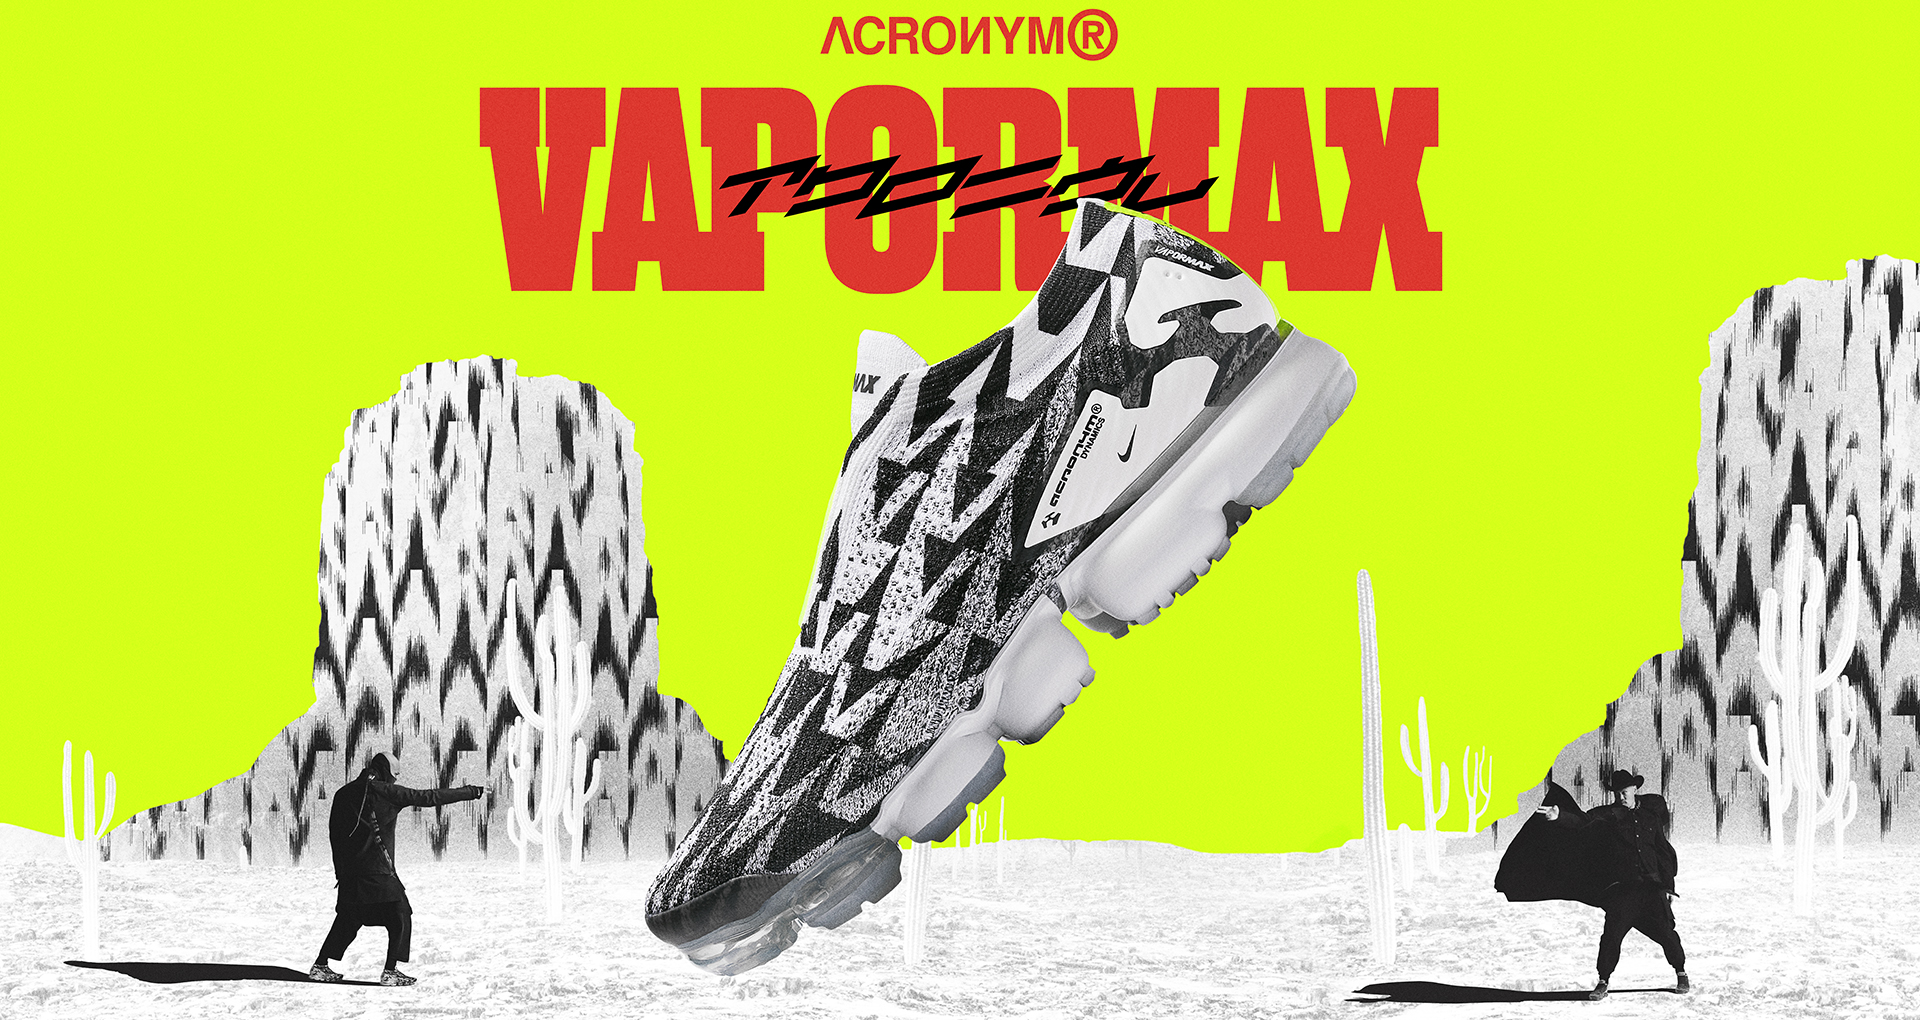 ACRONYM Nike Air VaporMax Moc 2 4